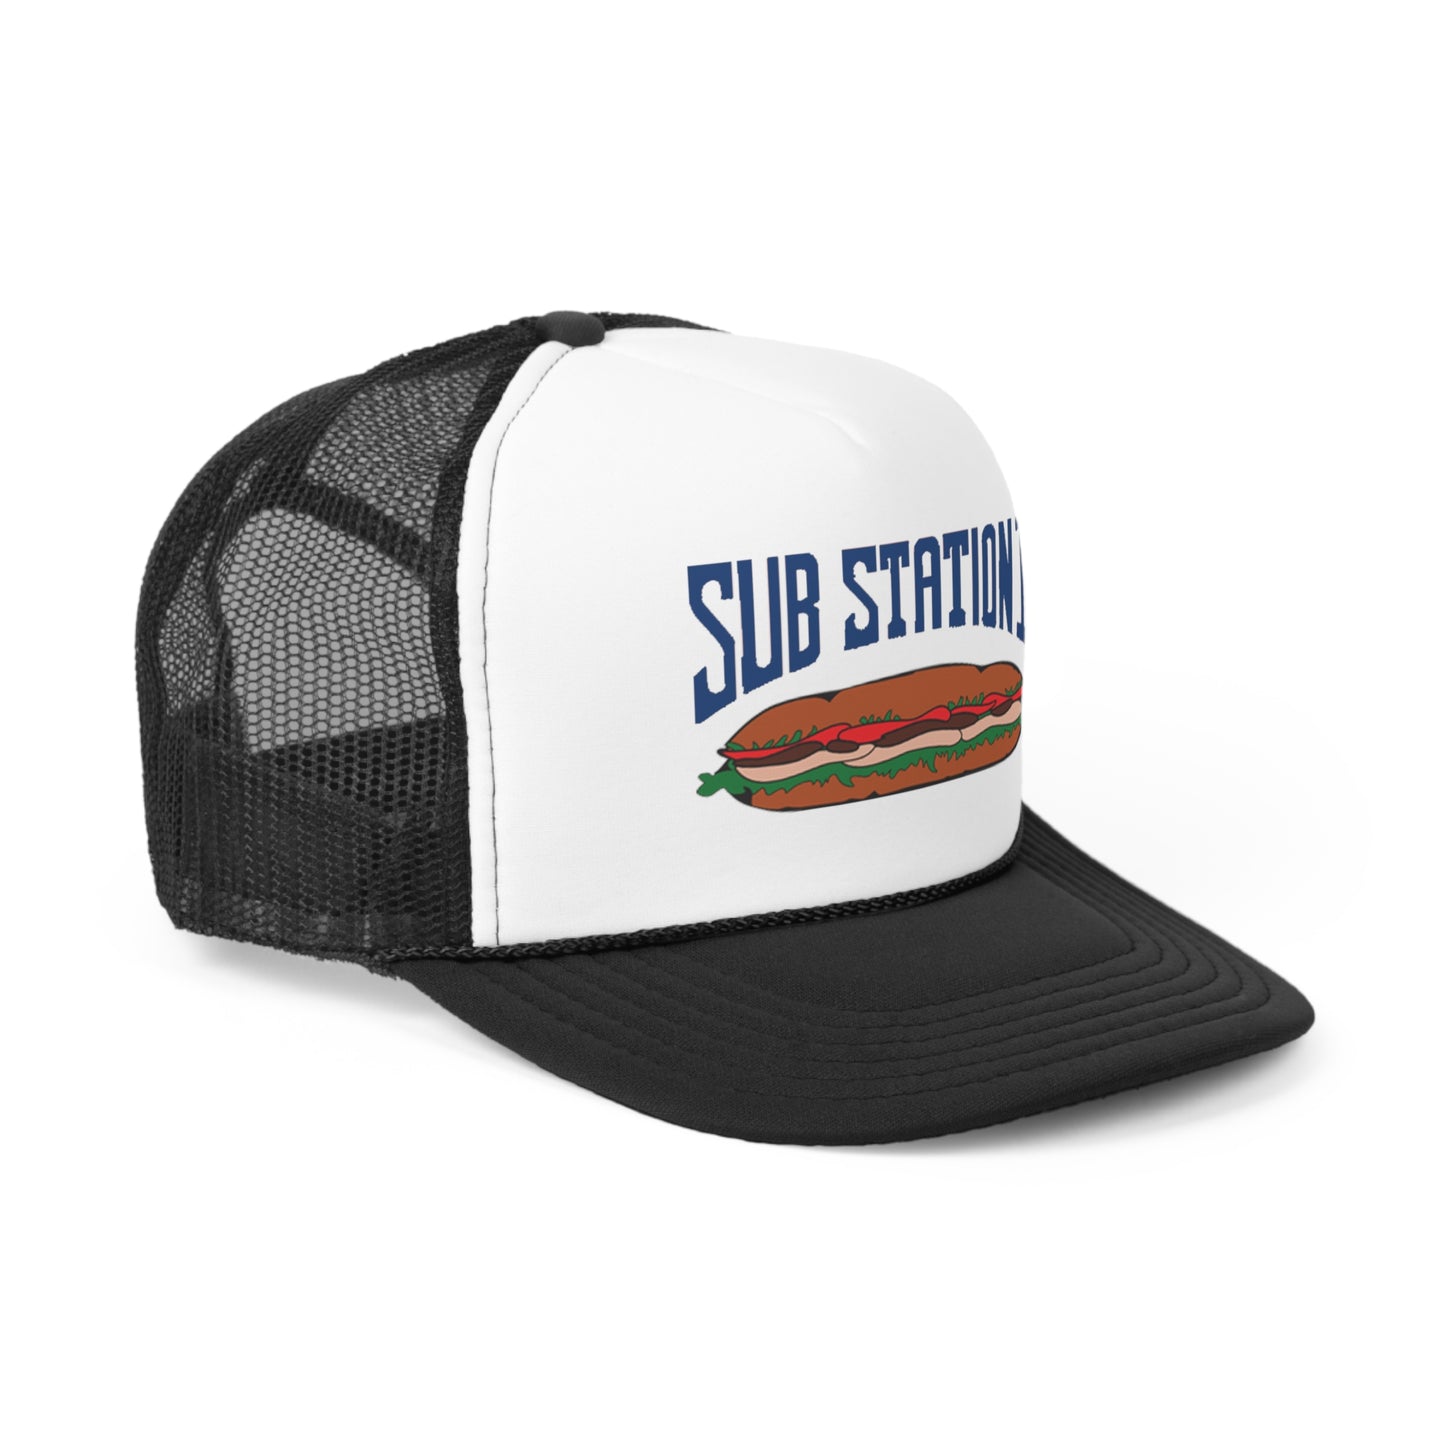 Retro Sub Station II Trucker Hat